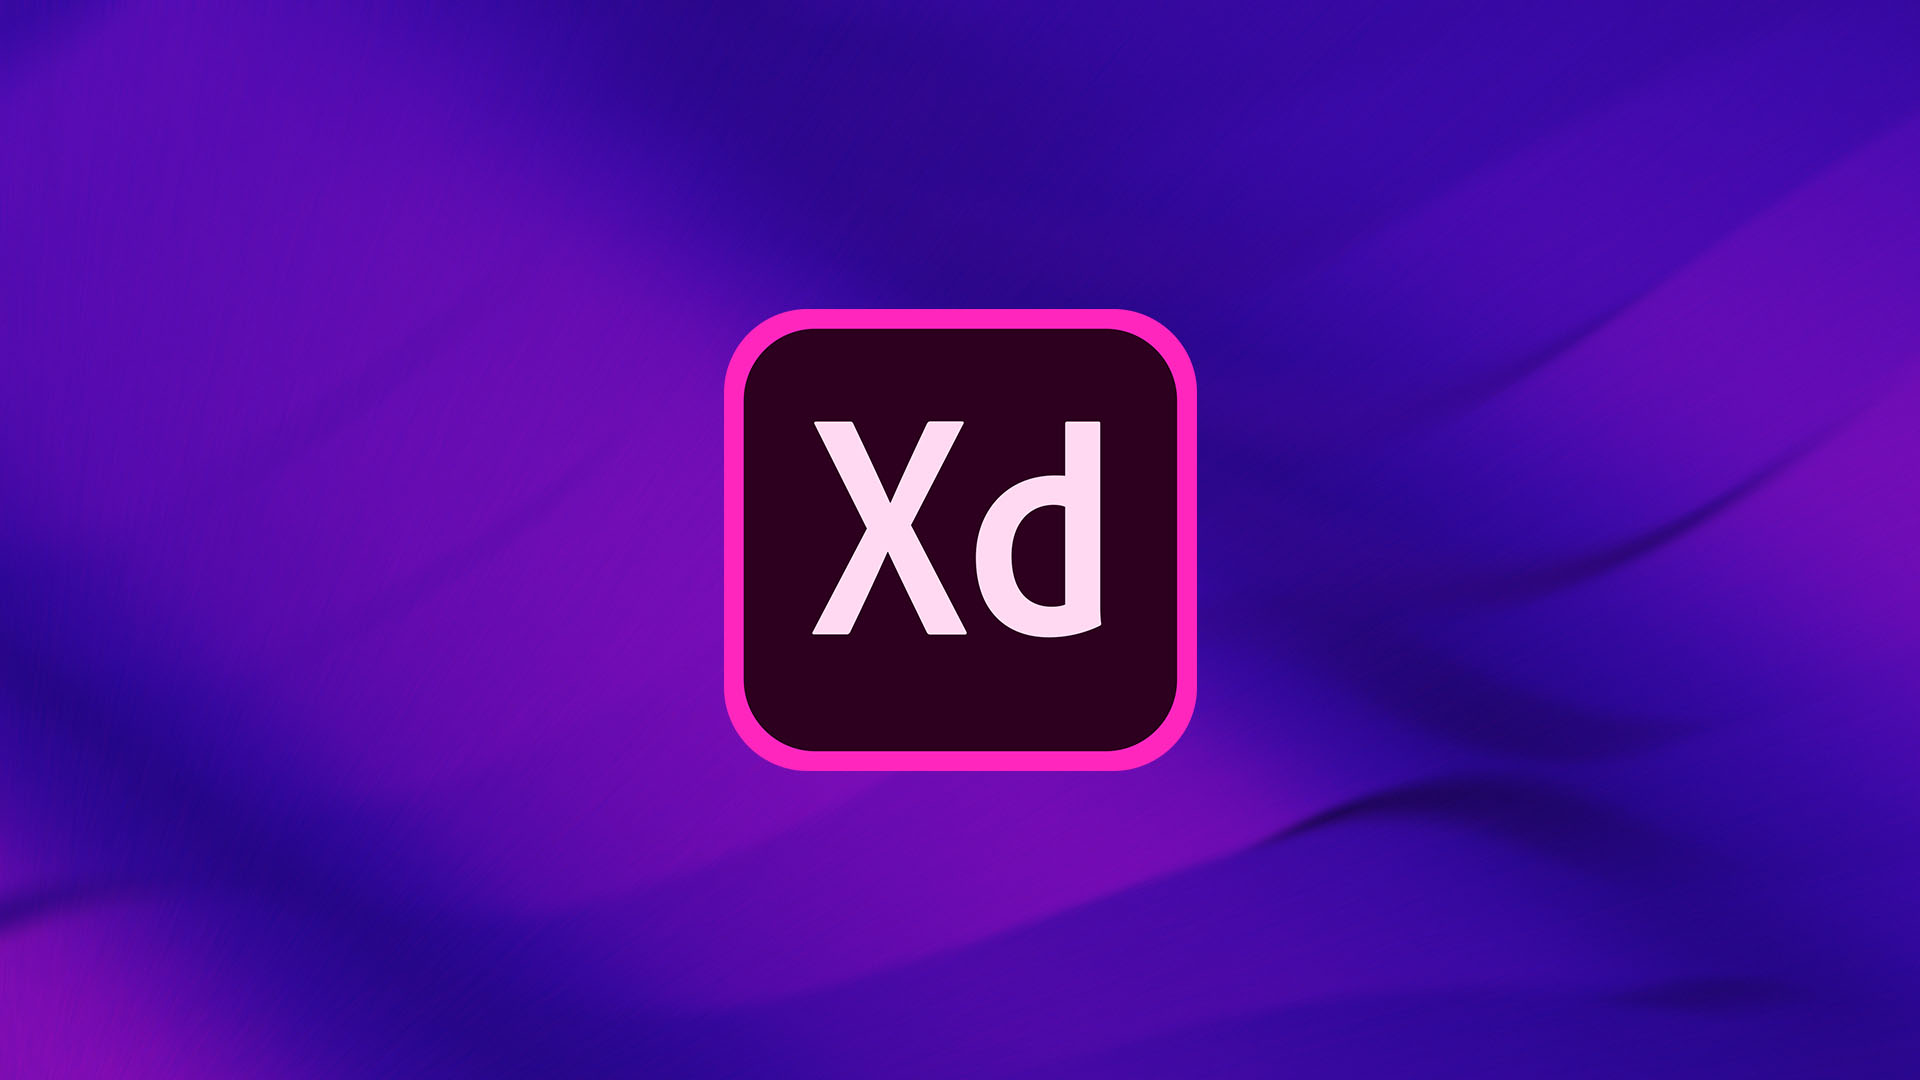 Adobe Xd Basics Course